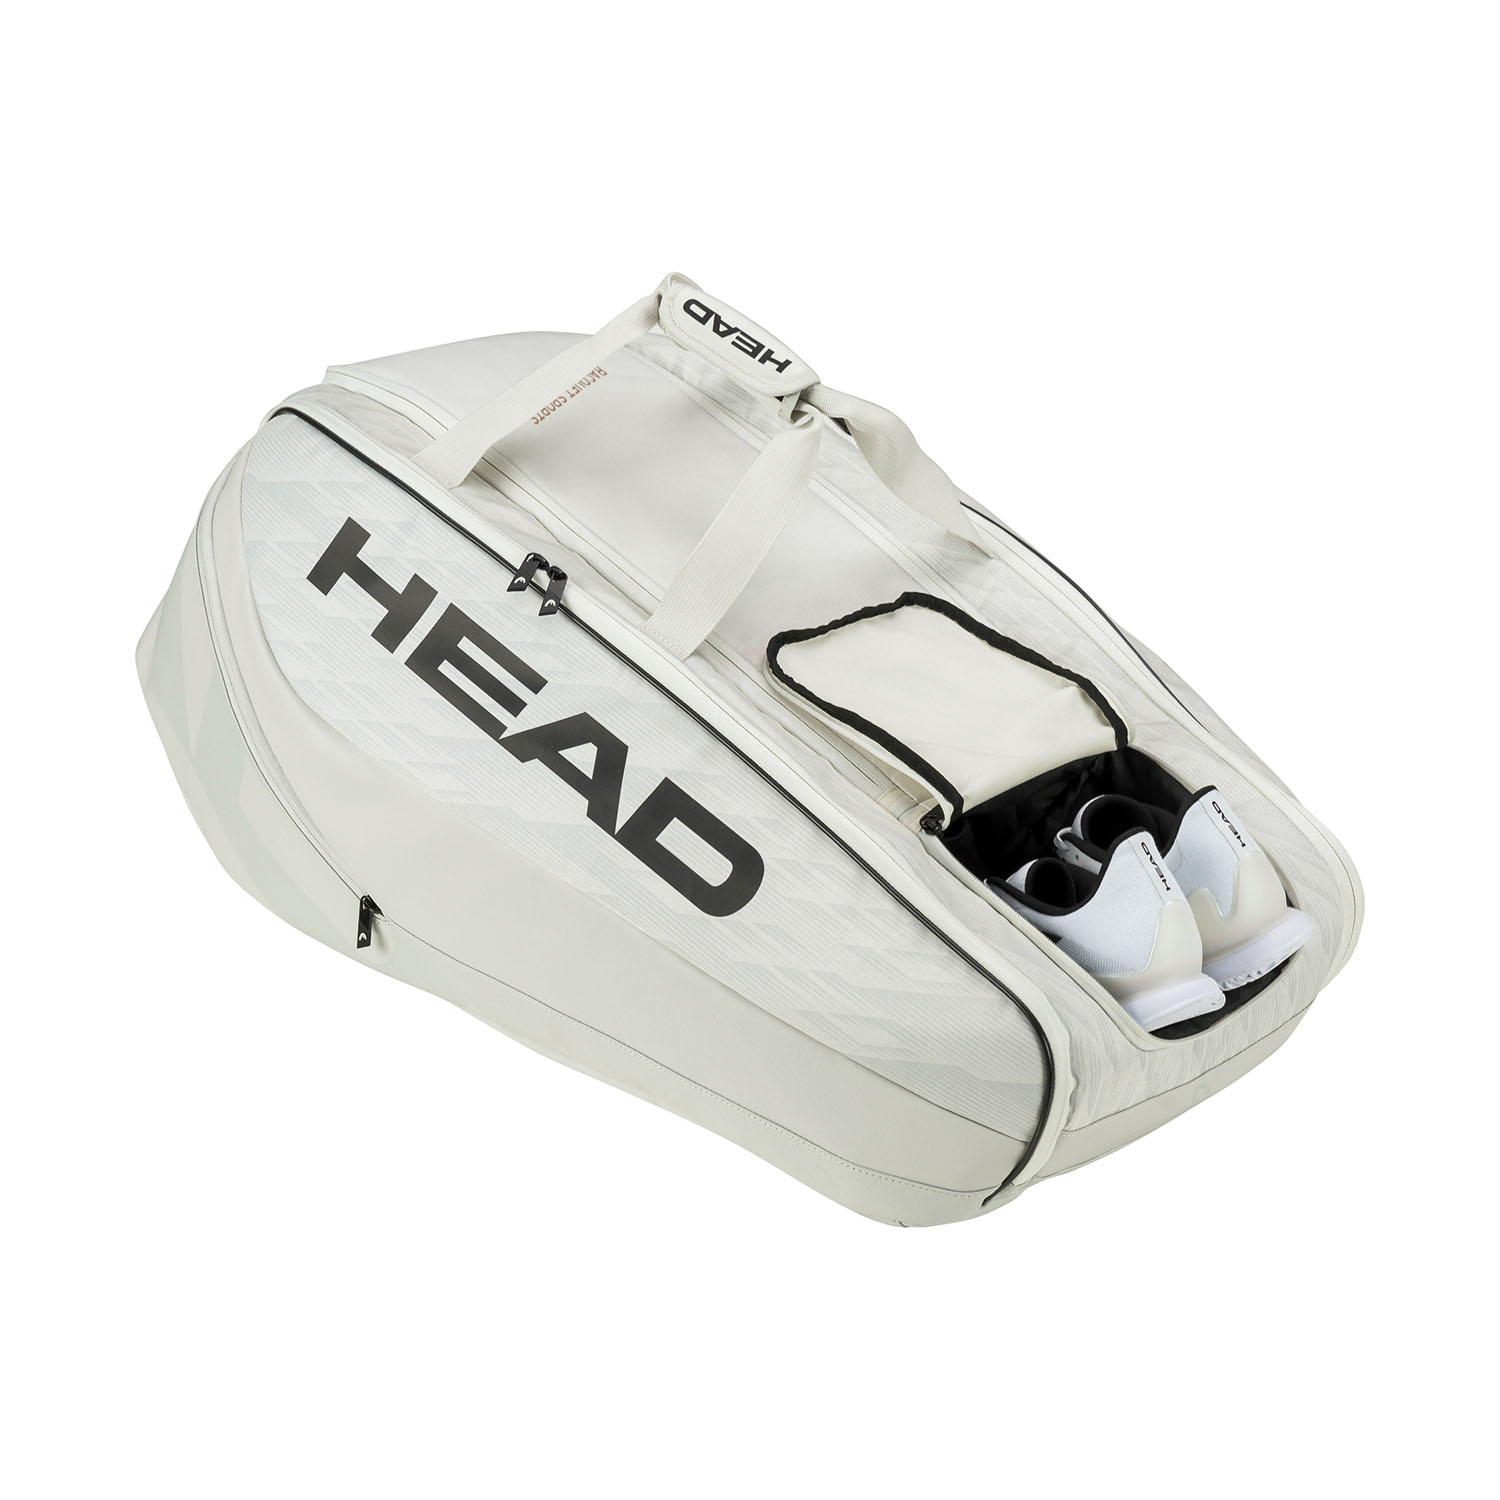 Head Pro X M Bag - Corduroy White/Black